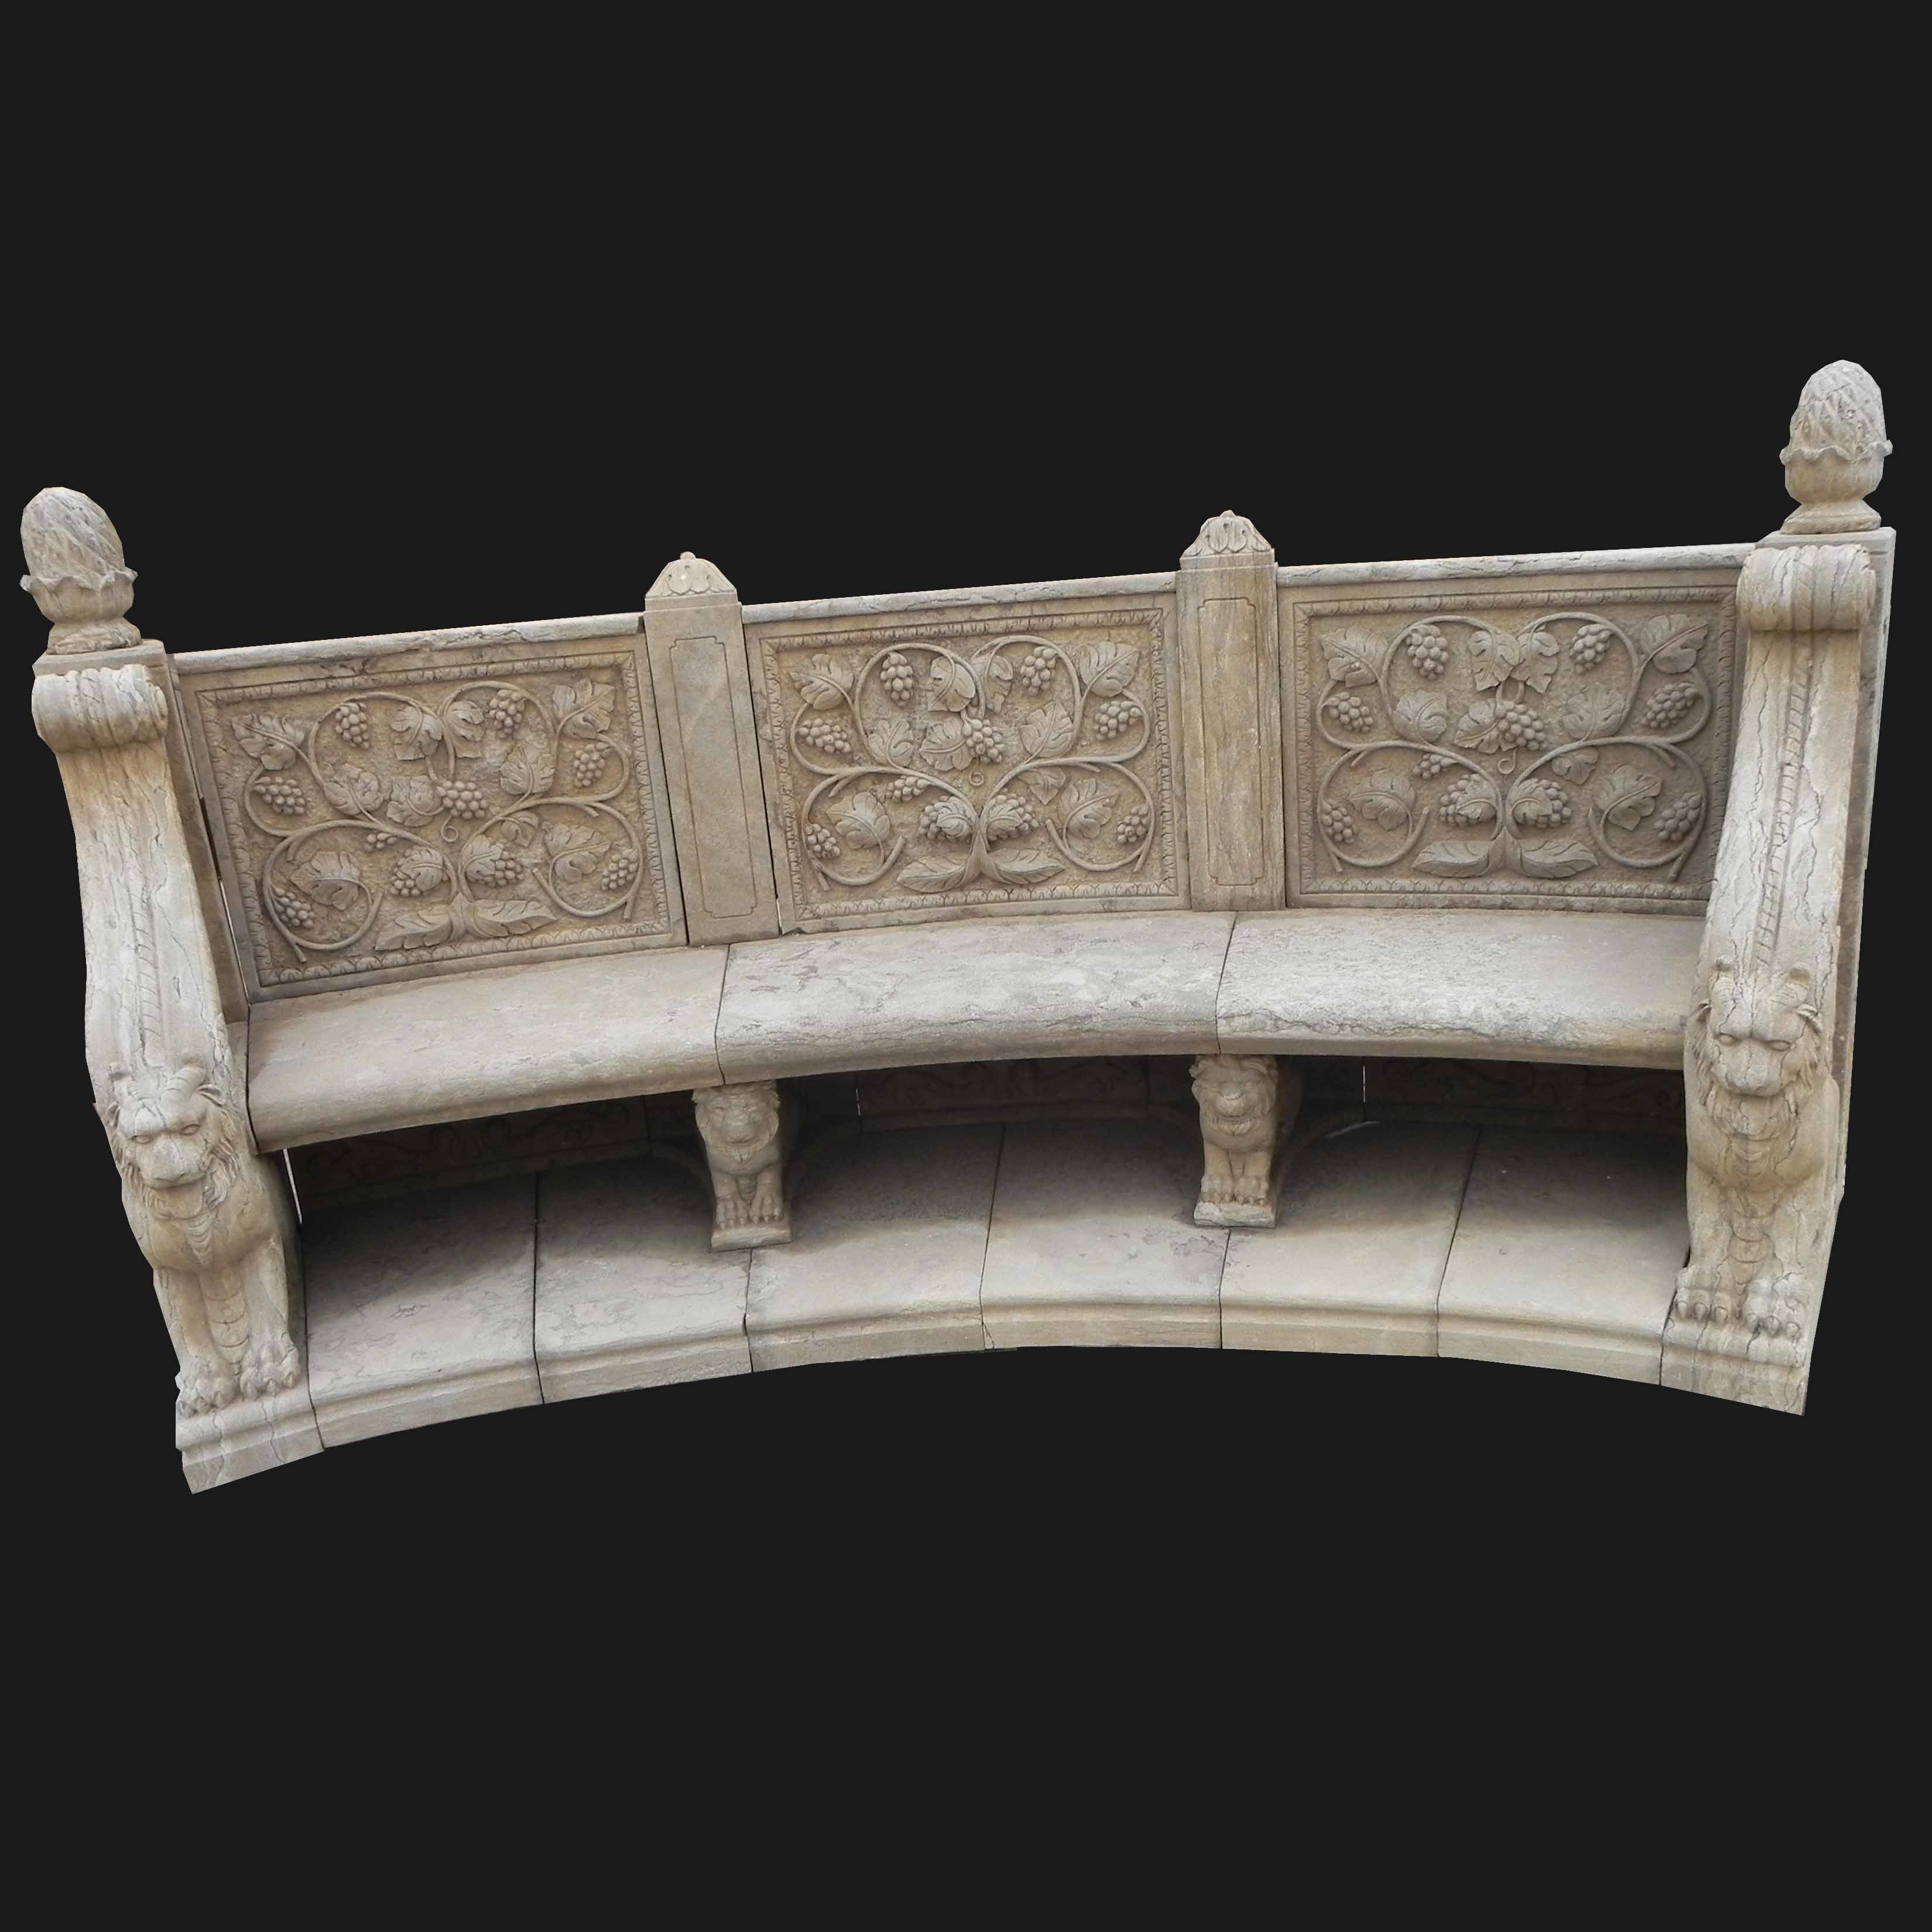 Stone Bench Seat, Garden Bench Furniture (BNH100)